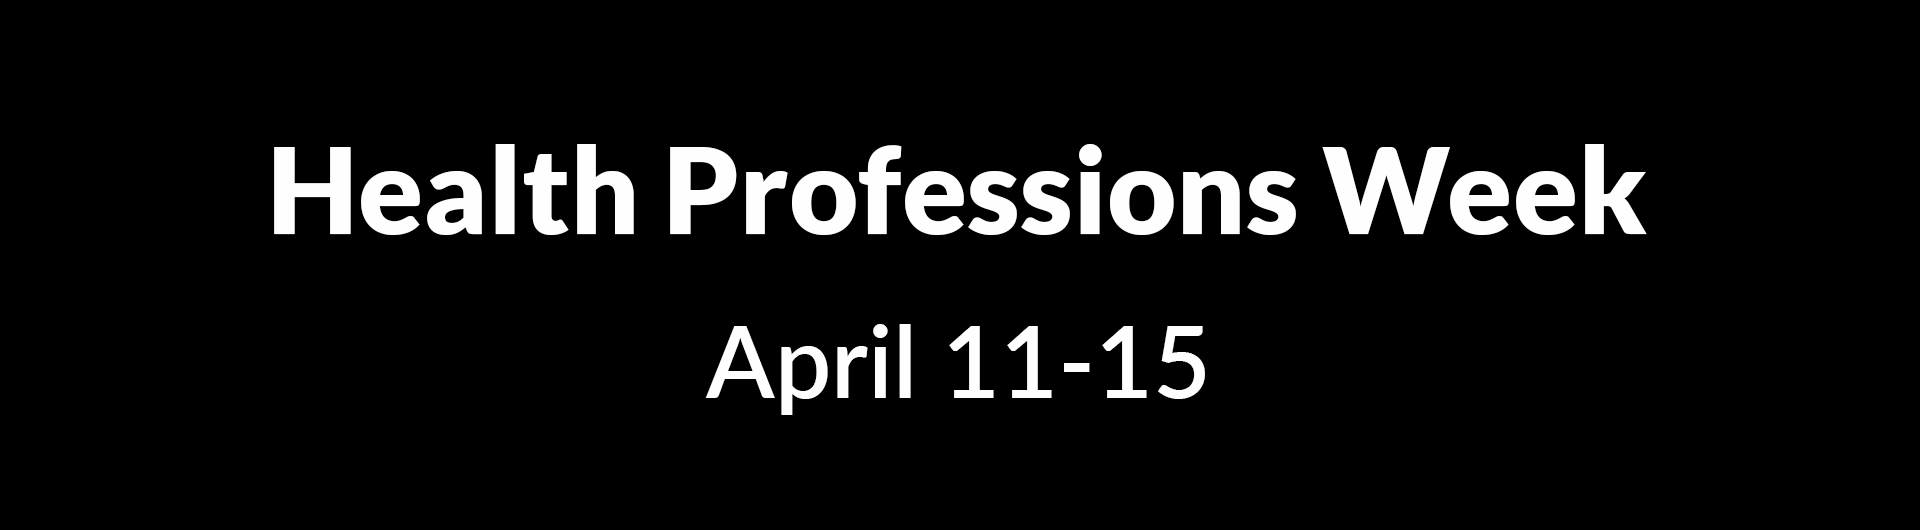 Health Professions Week. April 11-15